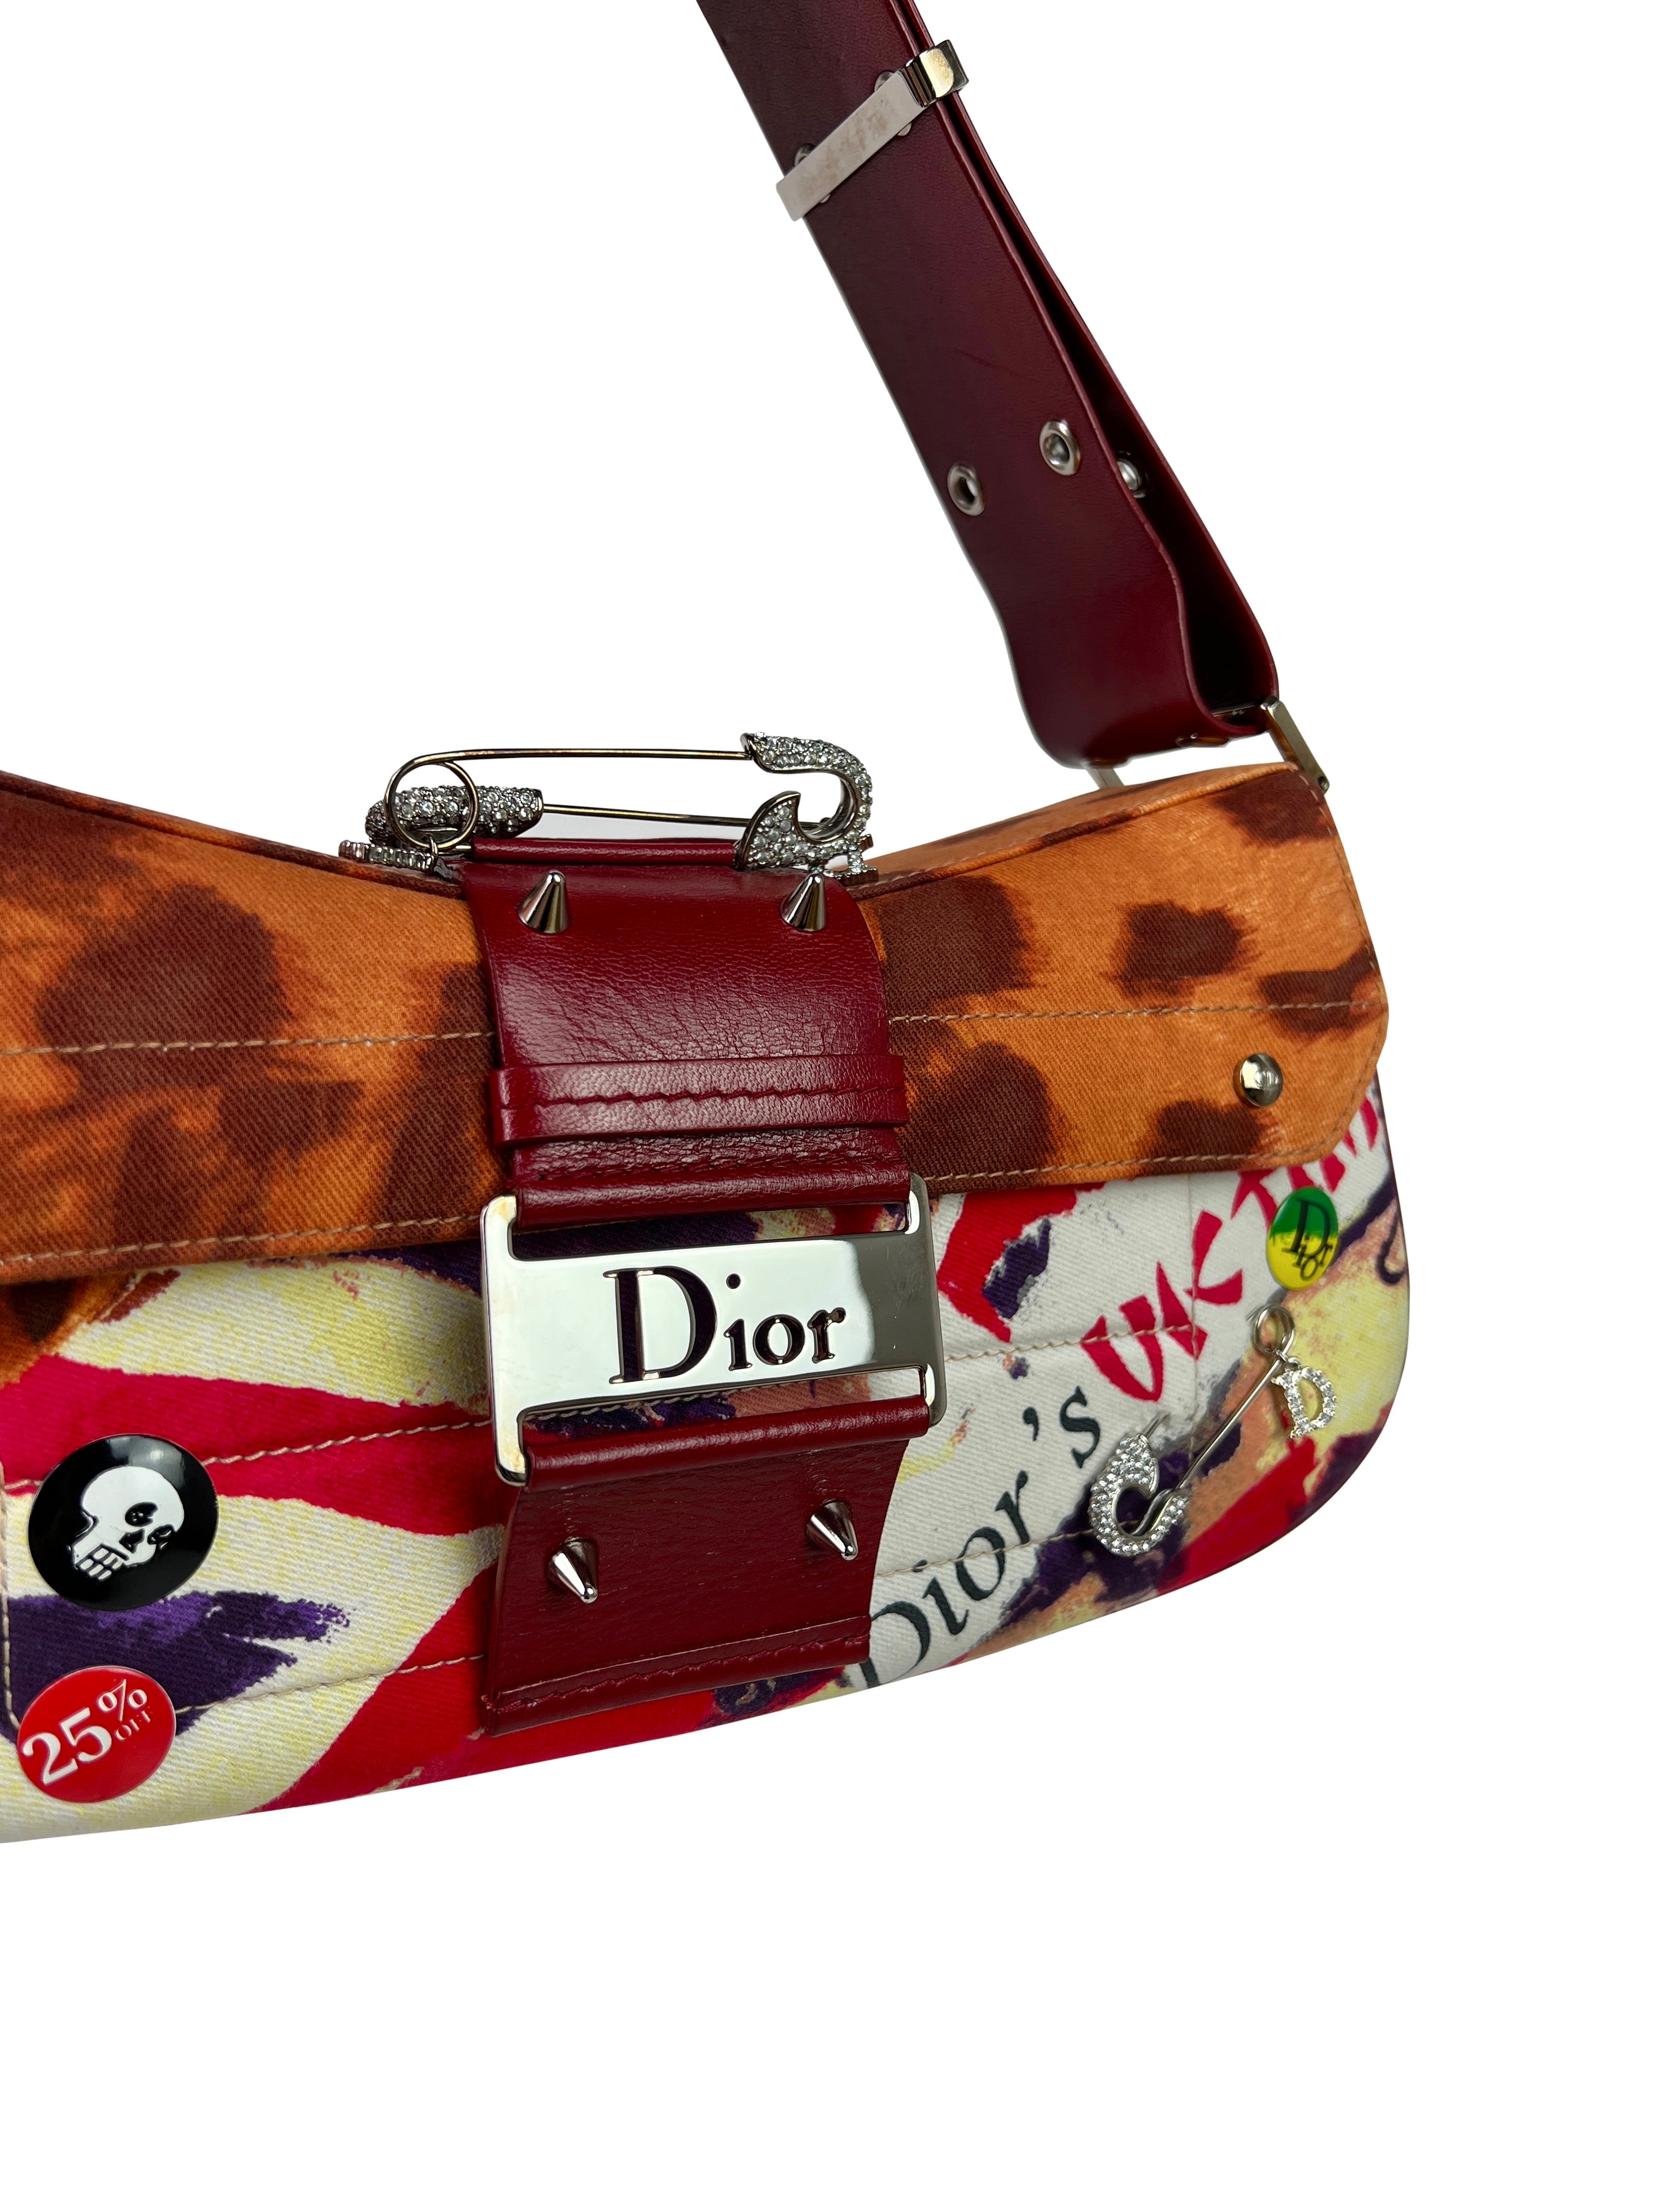 Dior Spring 2003 Limited Edition Columbus Street Chic Victim Handbag